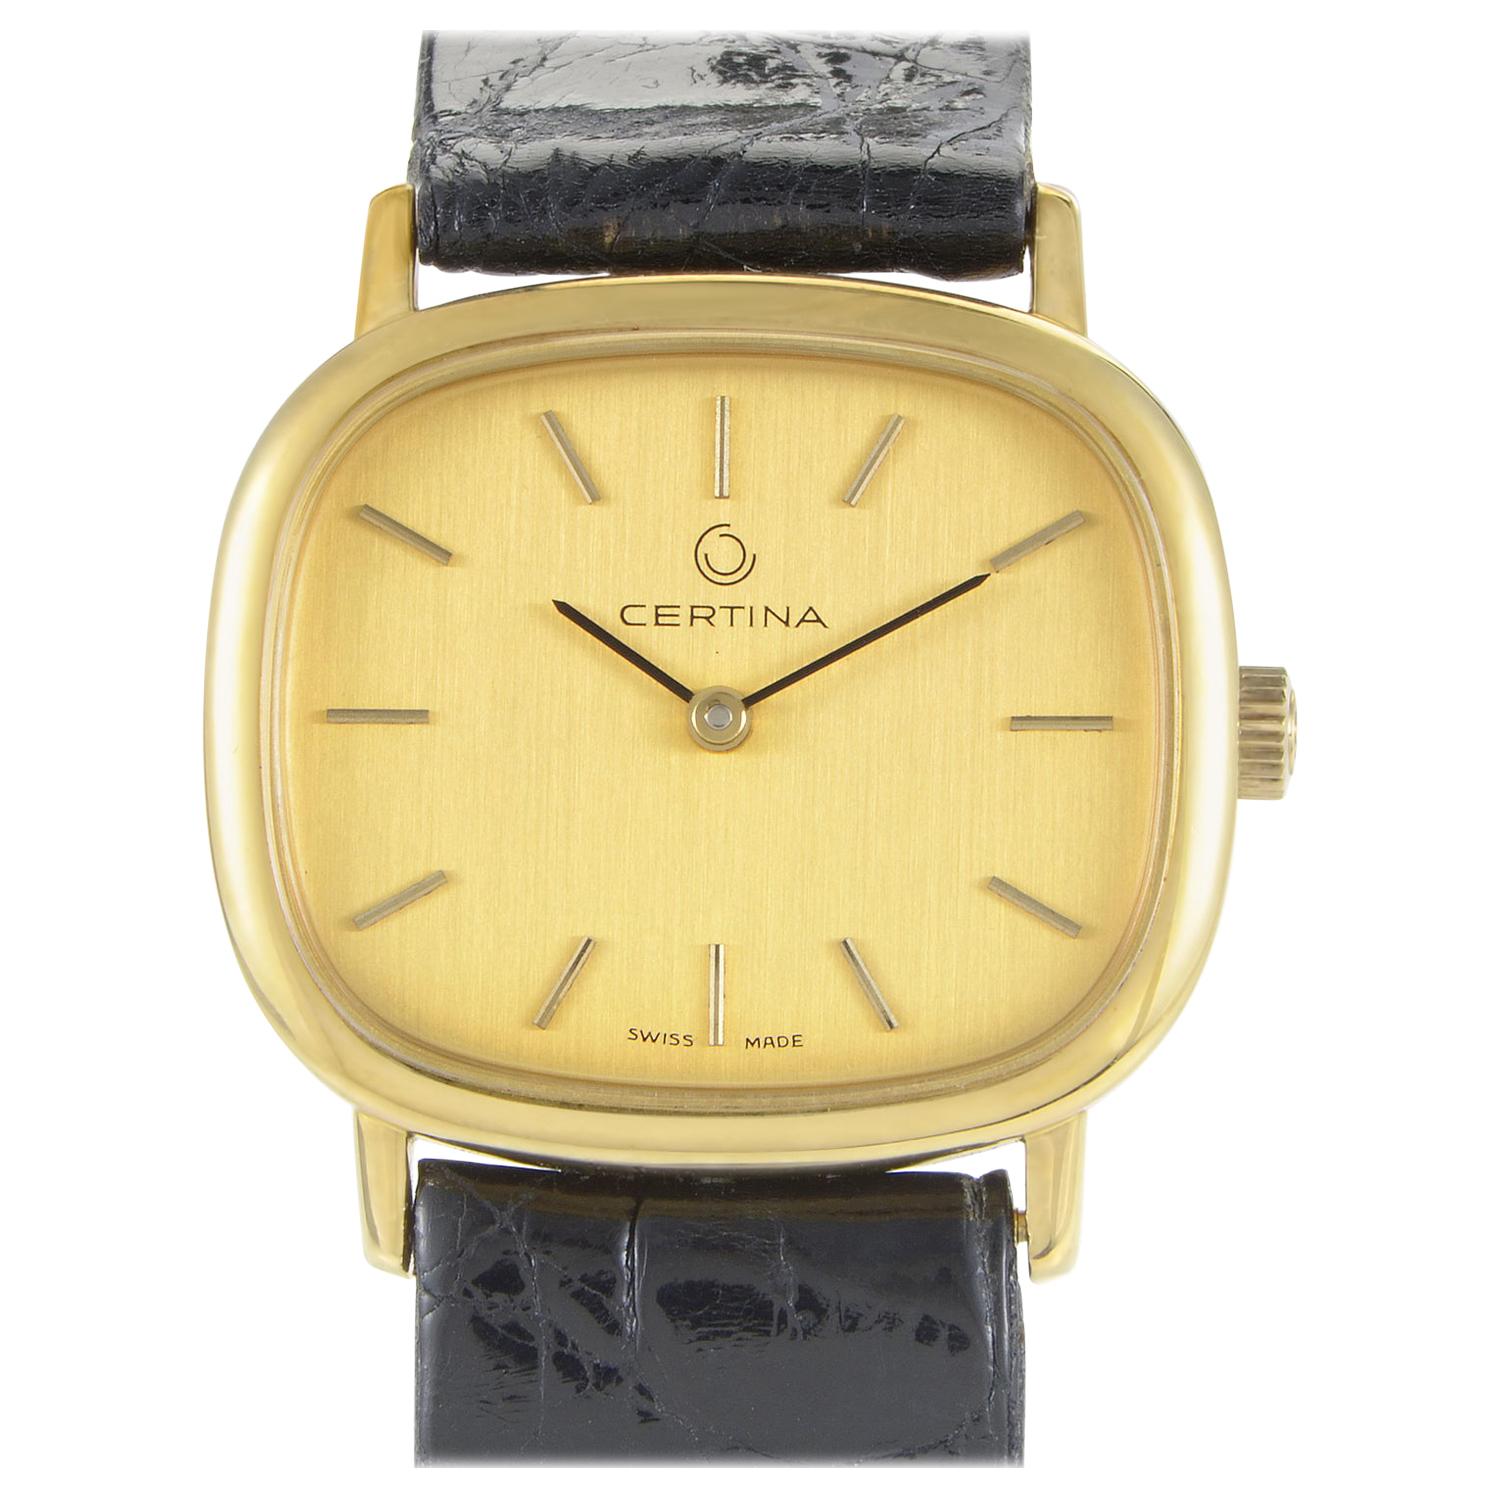 Certina Women's Yellow Gold Quartz Watch 5014019